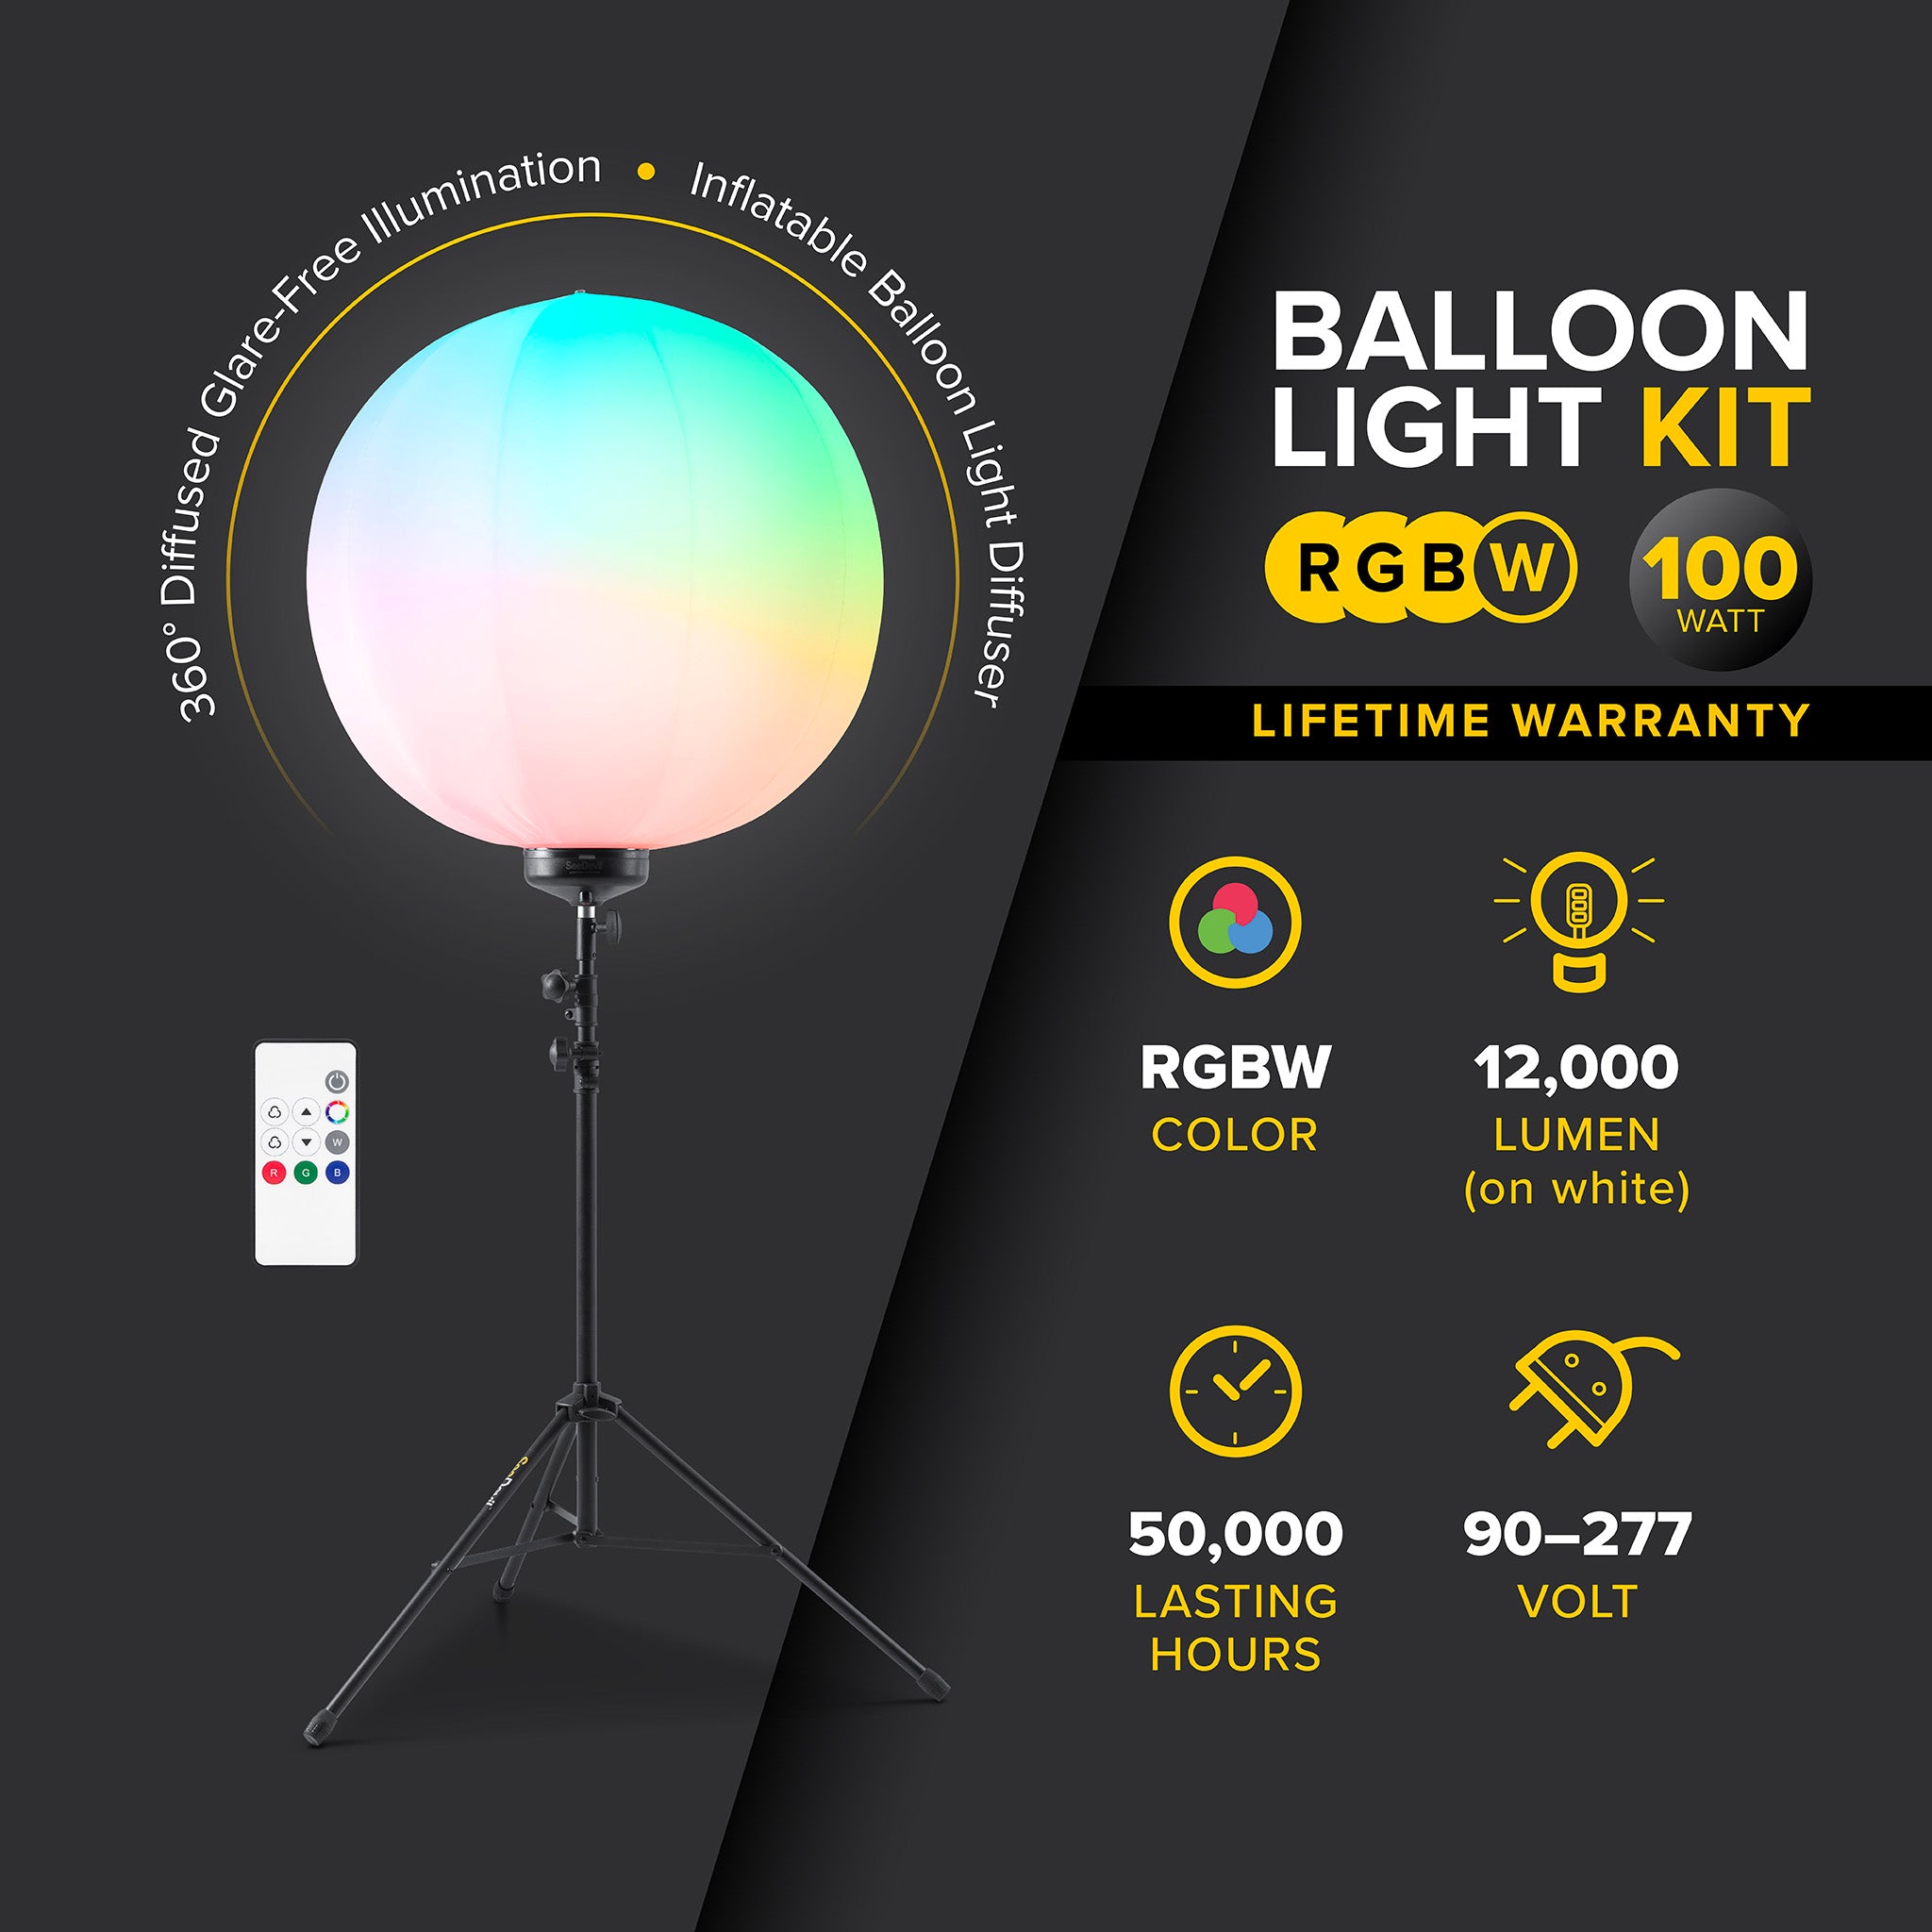 G3 - RGBW 100 Watt Color Changing LED Balloon Light Kit